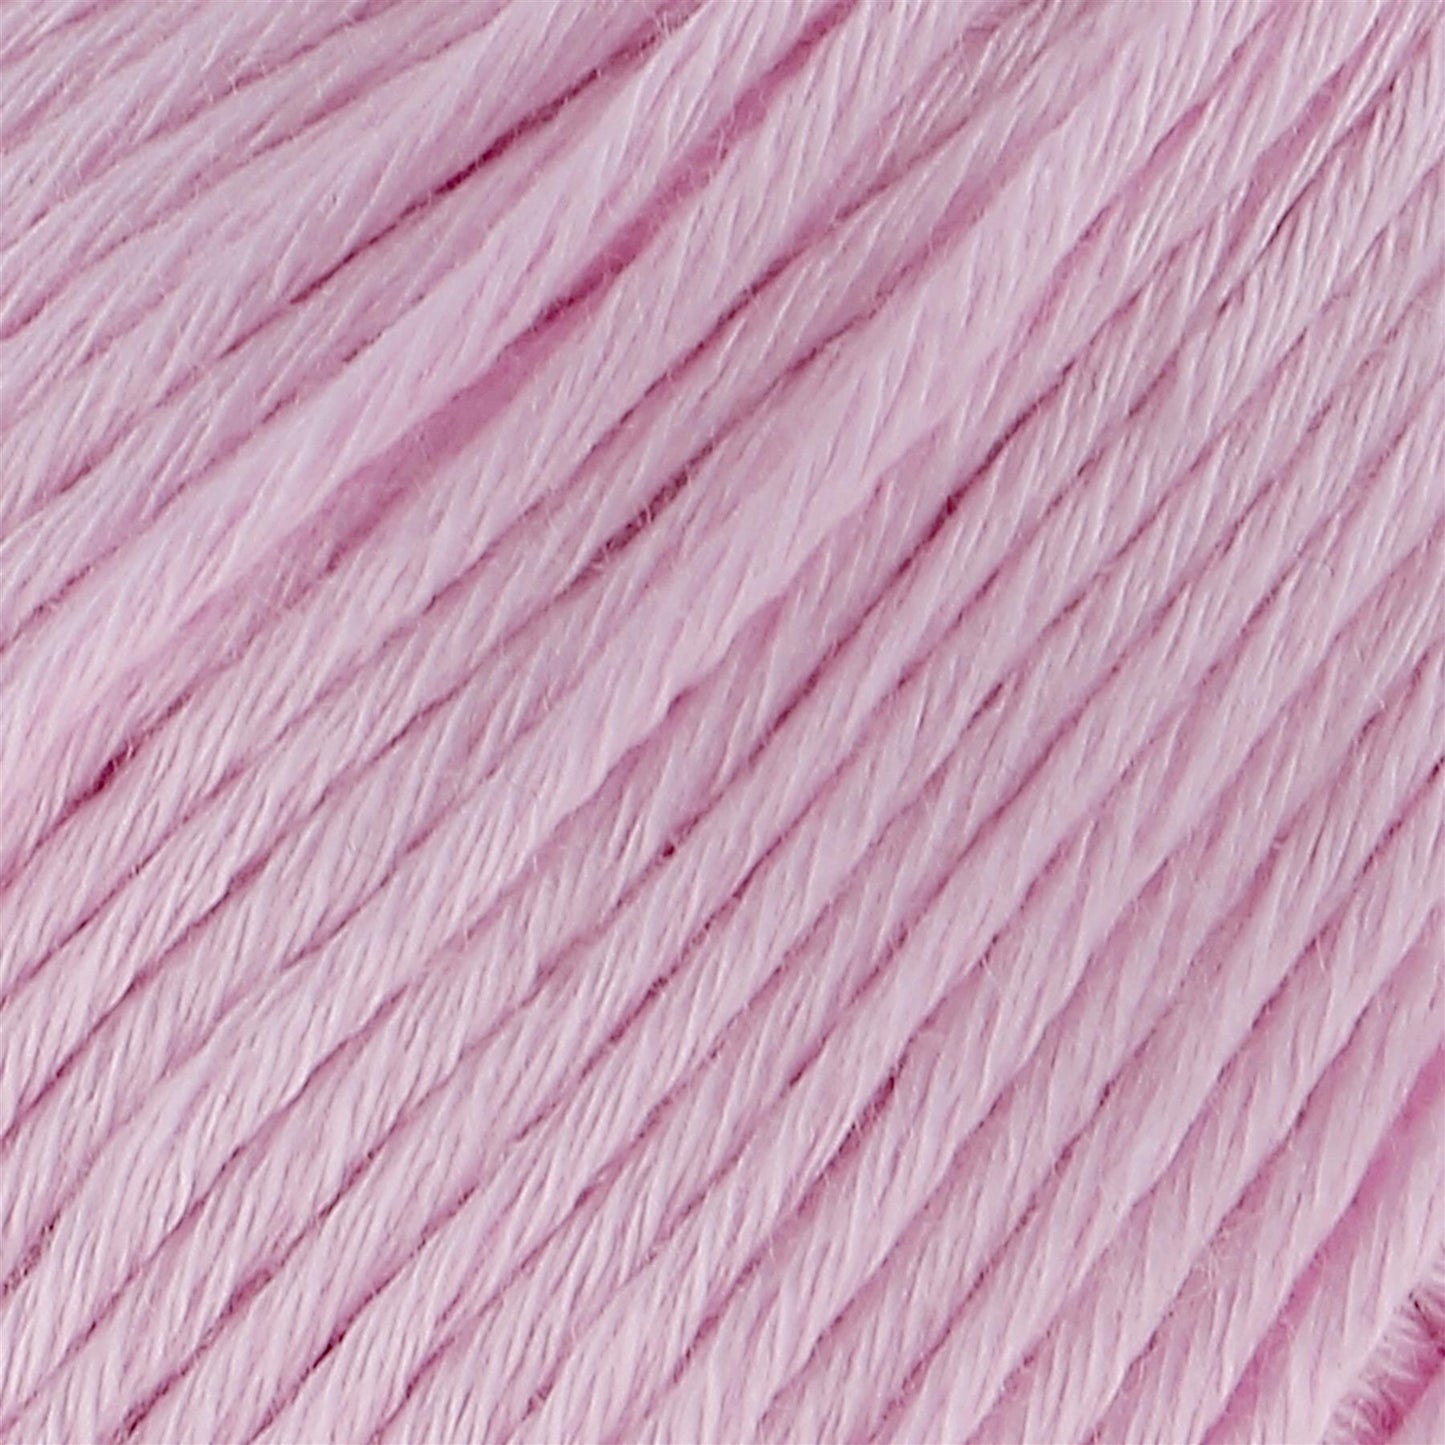 [Hoooked] EC0850G Eucalyps Rosa Pink Eucalyptus Yarn - 82.5M, 50g